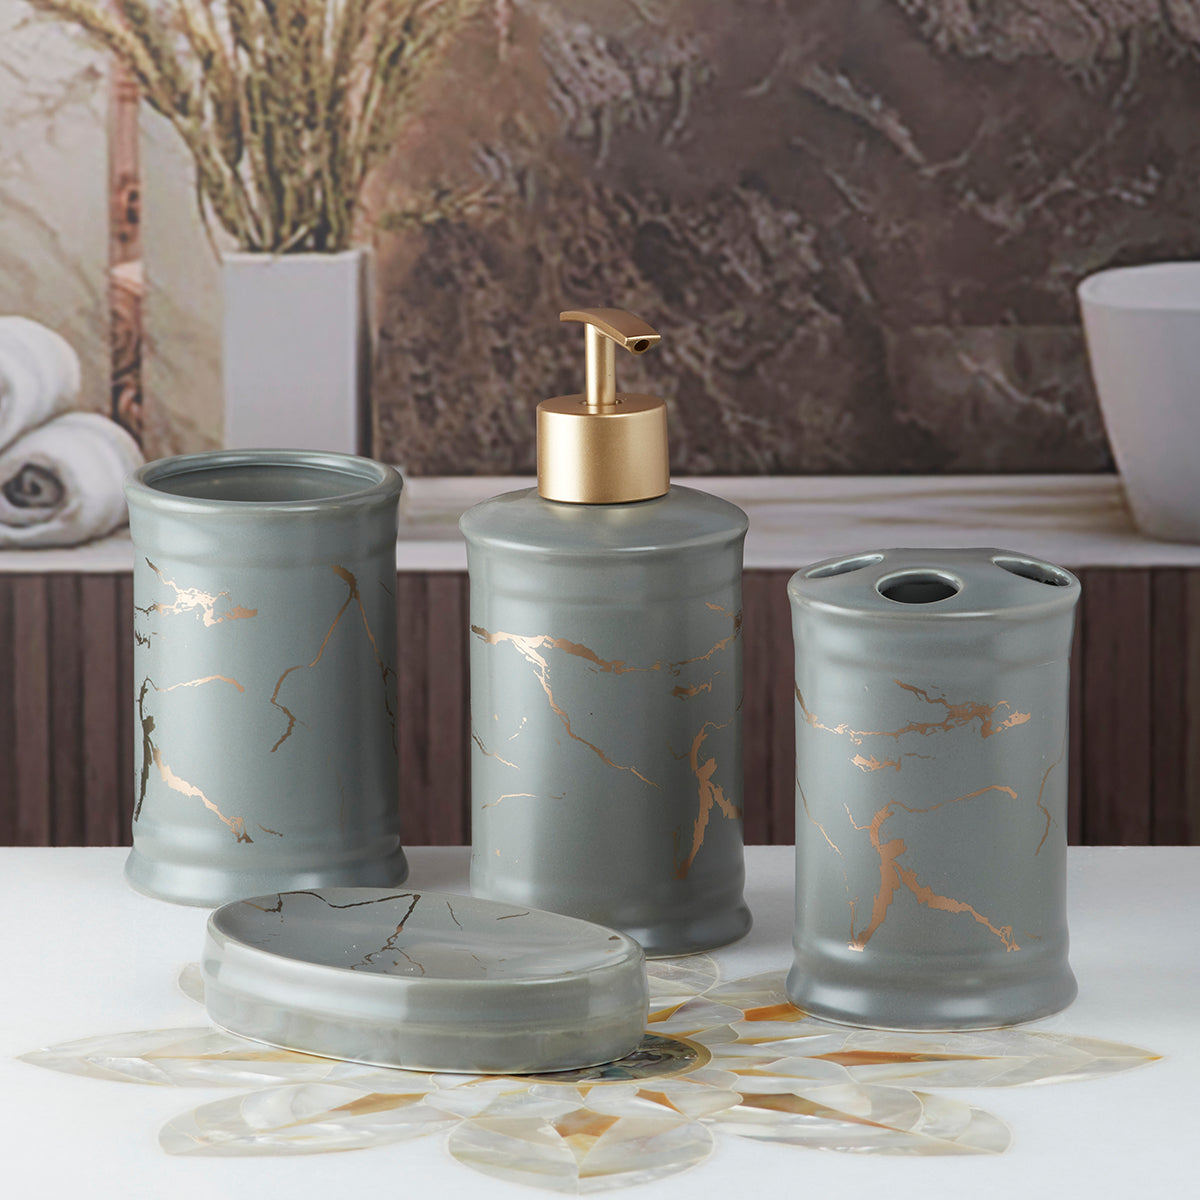 Ceramic Bathroom Accessories Set of 4 Bath Set with Soap Dispenser (8227)